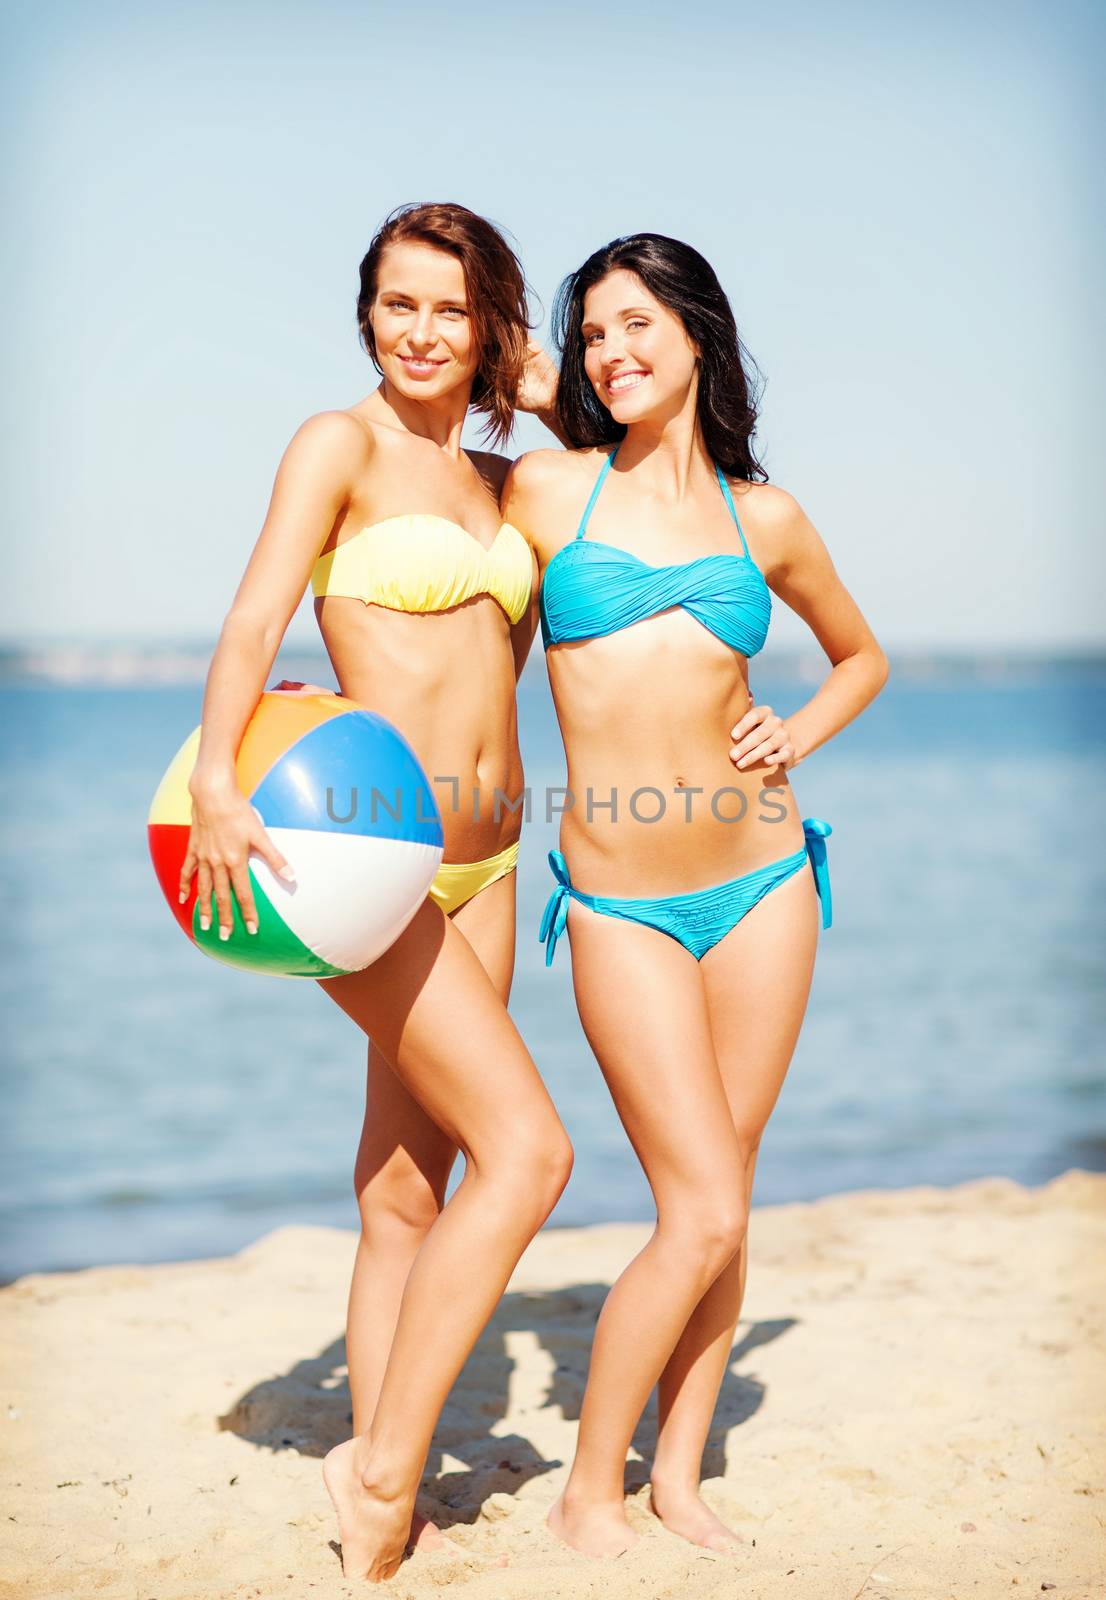 girls with ball on the beach by dolgachov